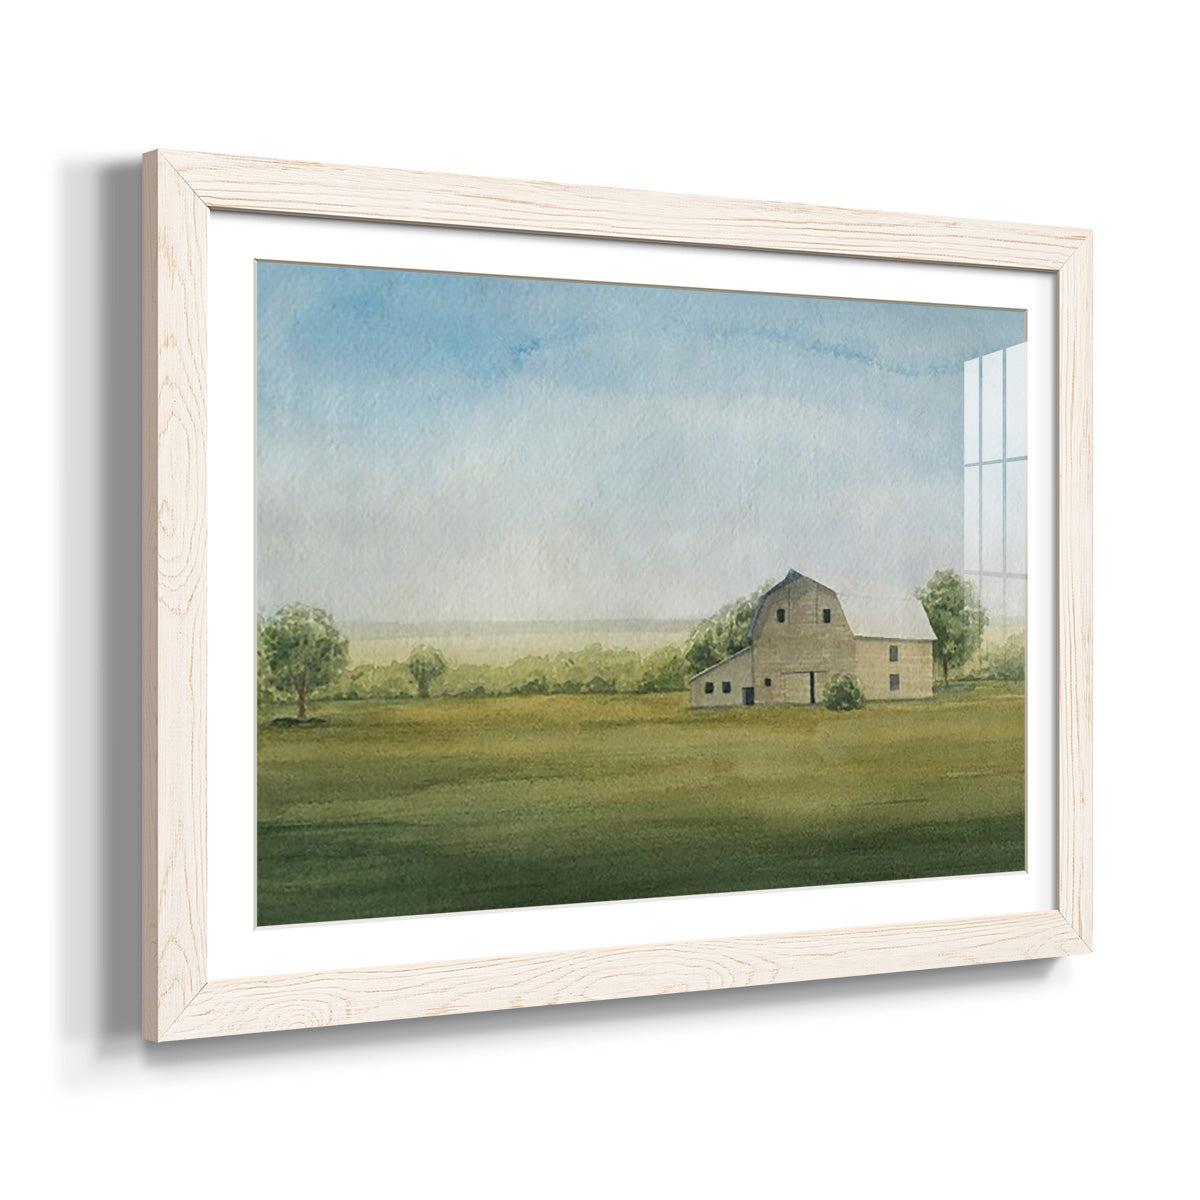 Grove Farm I-Premium Framed Print - Ready to Hang